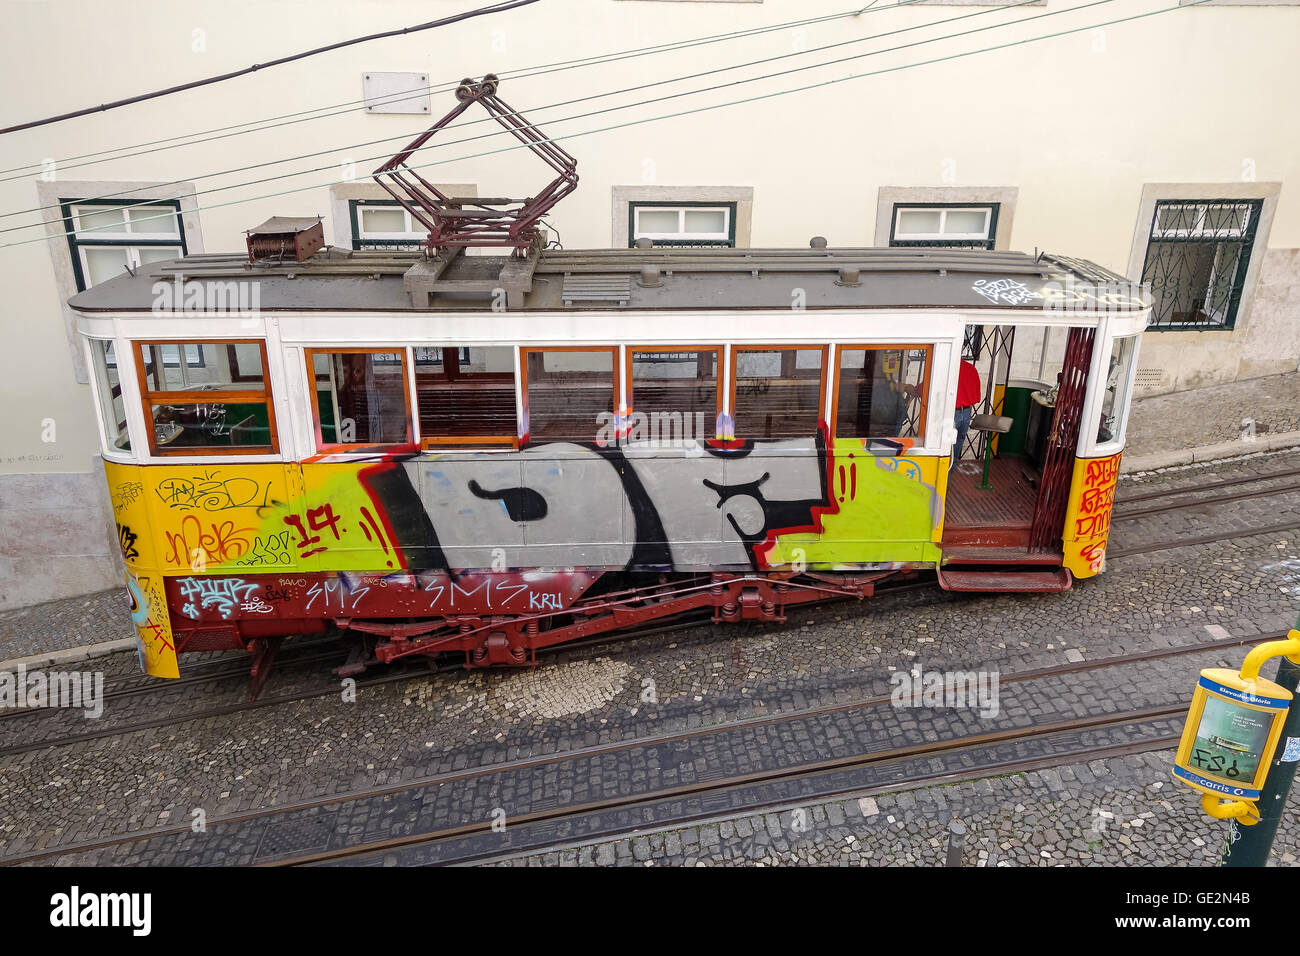 Lisbon, Portugal - September 19, 2014: Tram, the symbol of the city in narrow street of Lisbon. Stock Photo